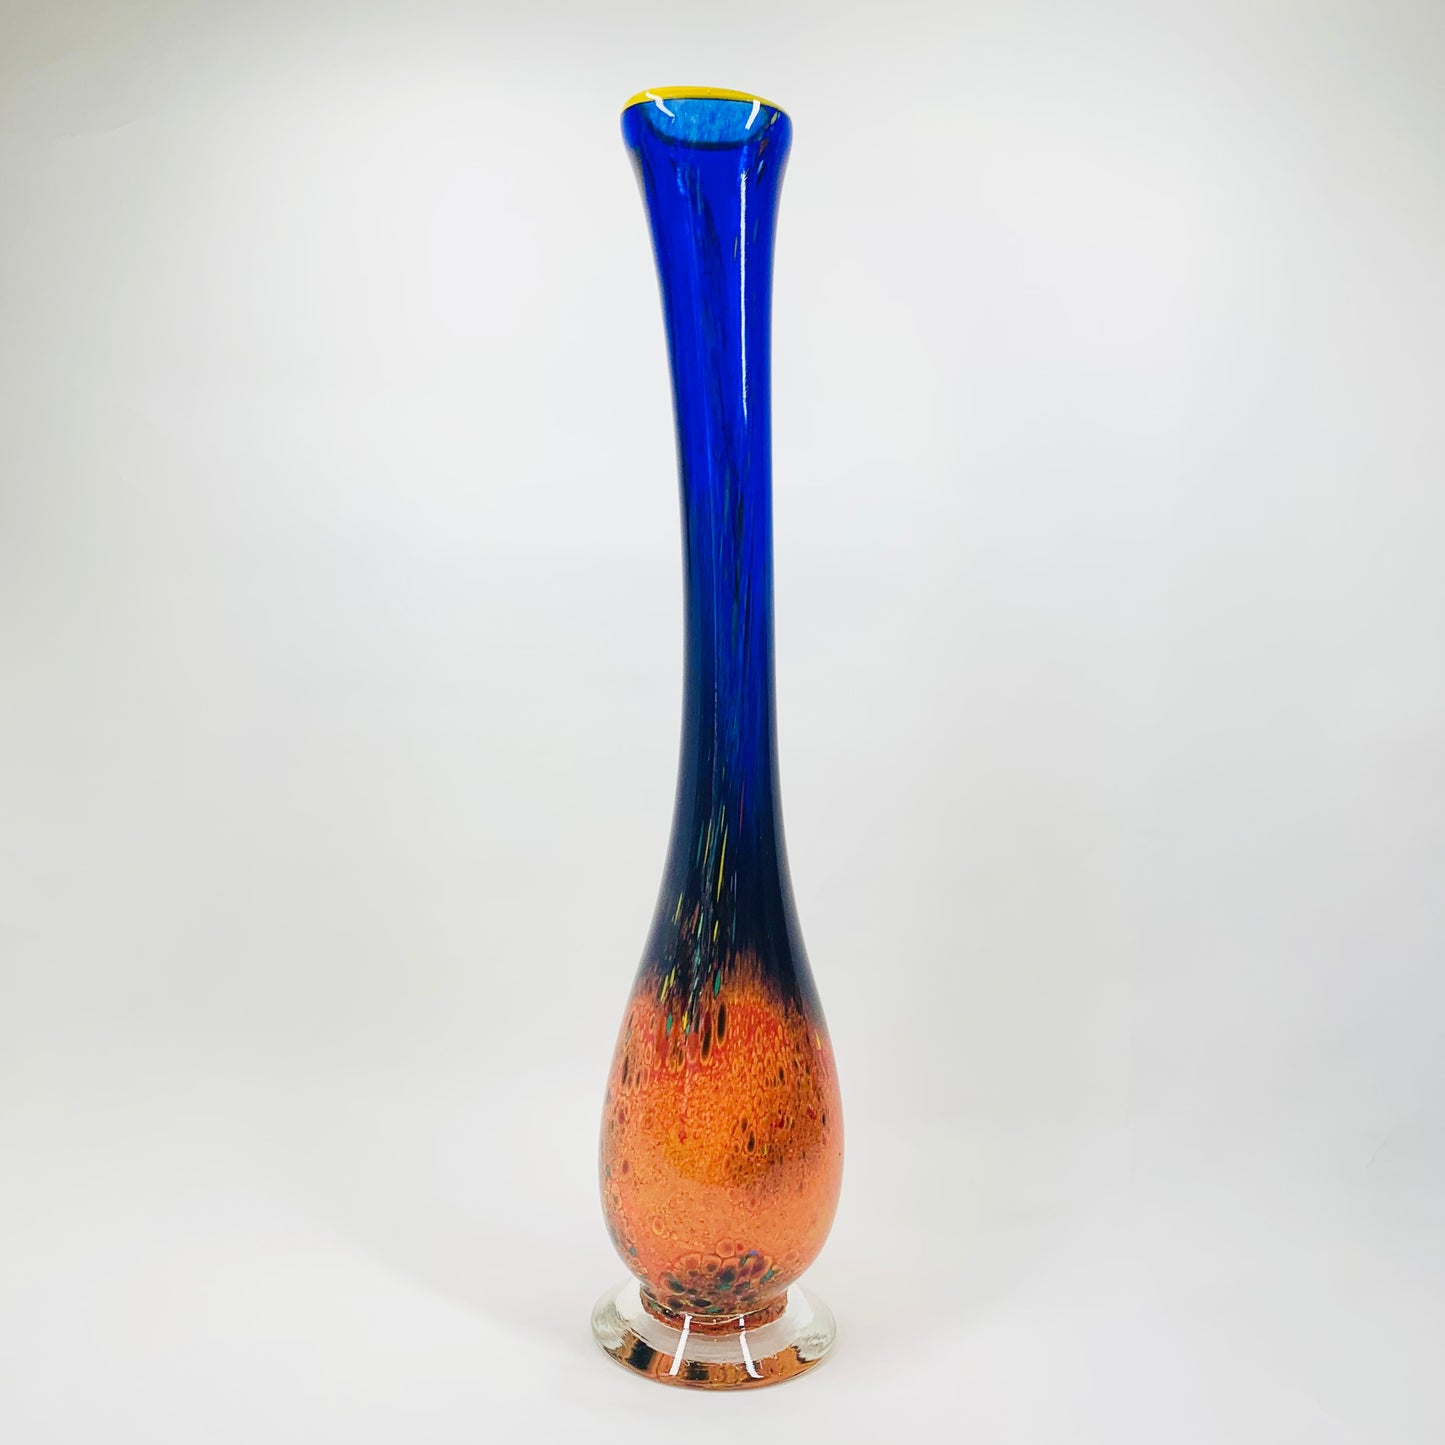 Vintage mouth blown art glass Outback series vase by Australian artist Eamonn Vereker